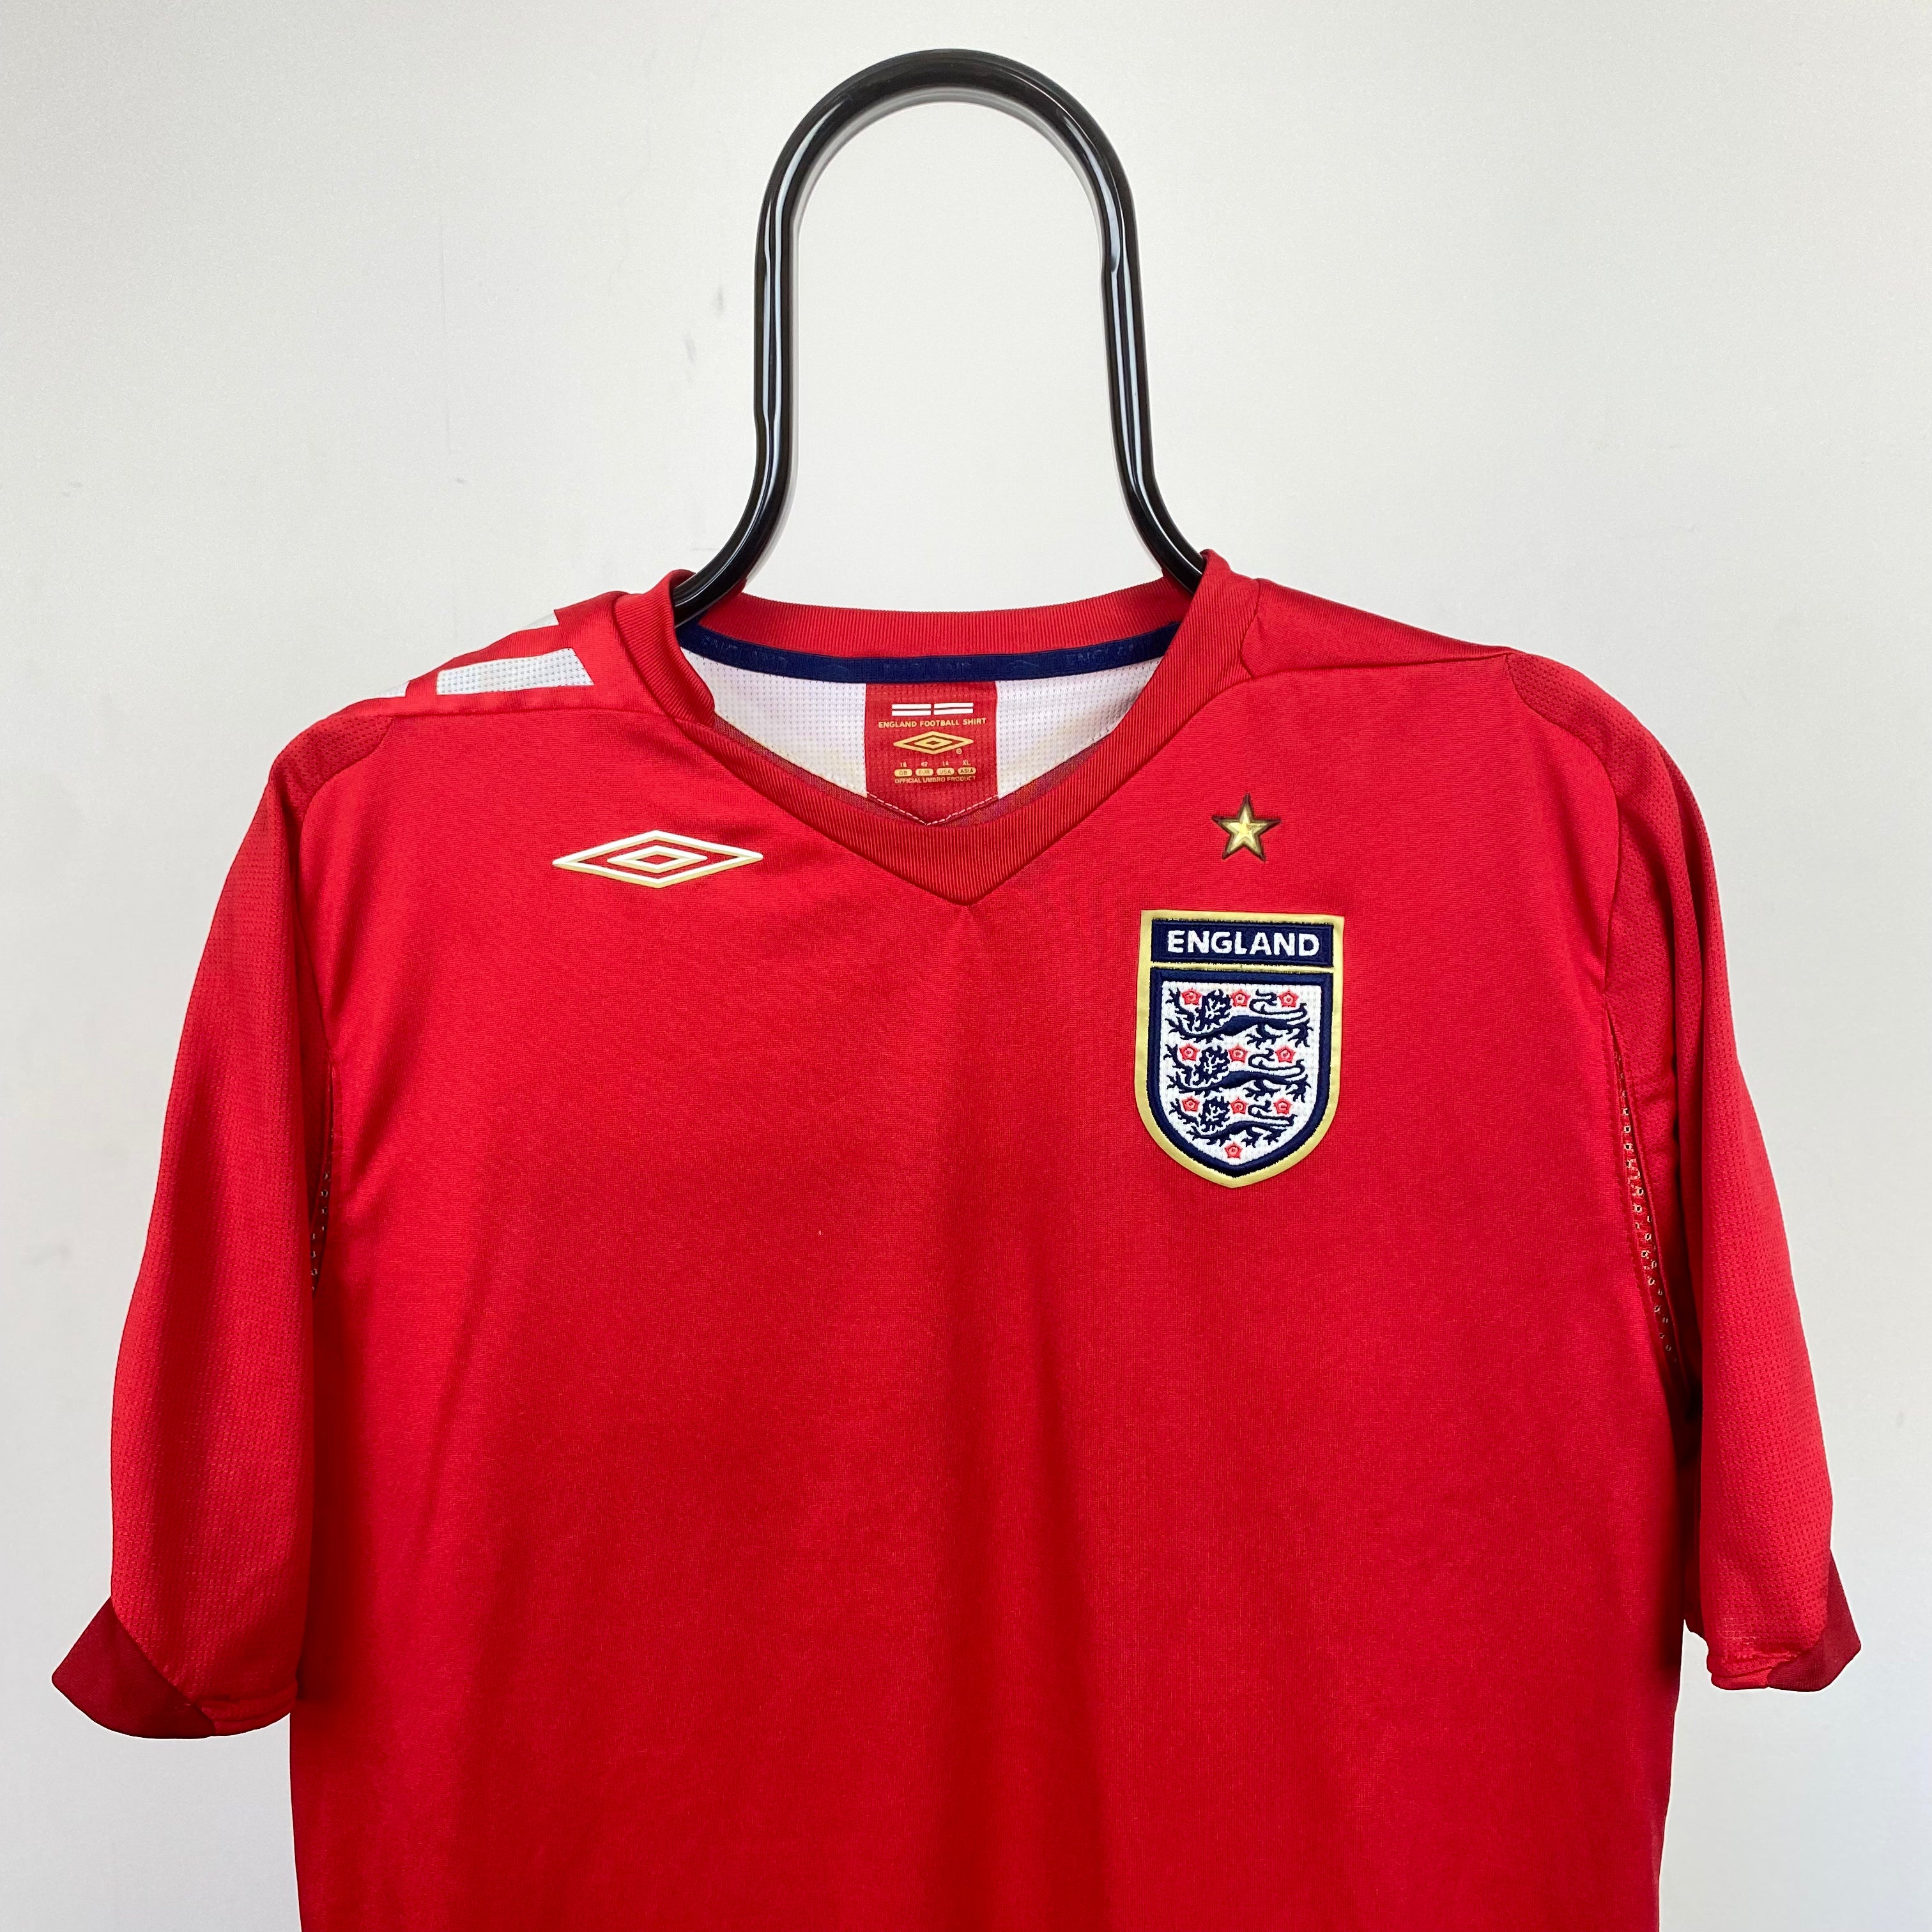 00s Umbro England Football Shirt T-Shirt Red Small